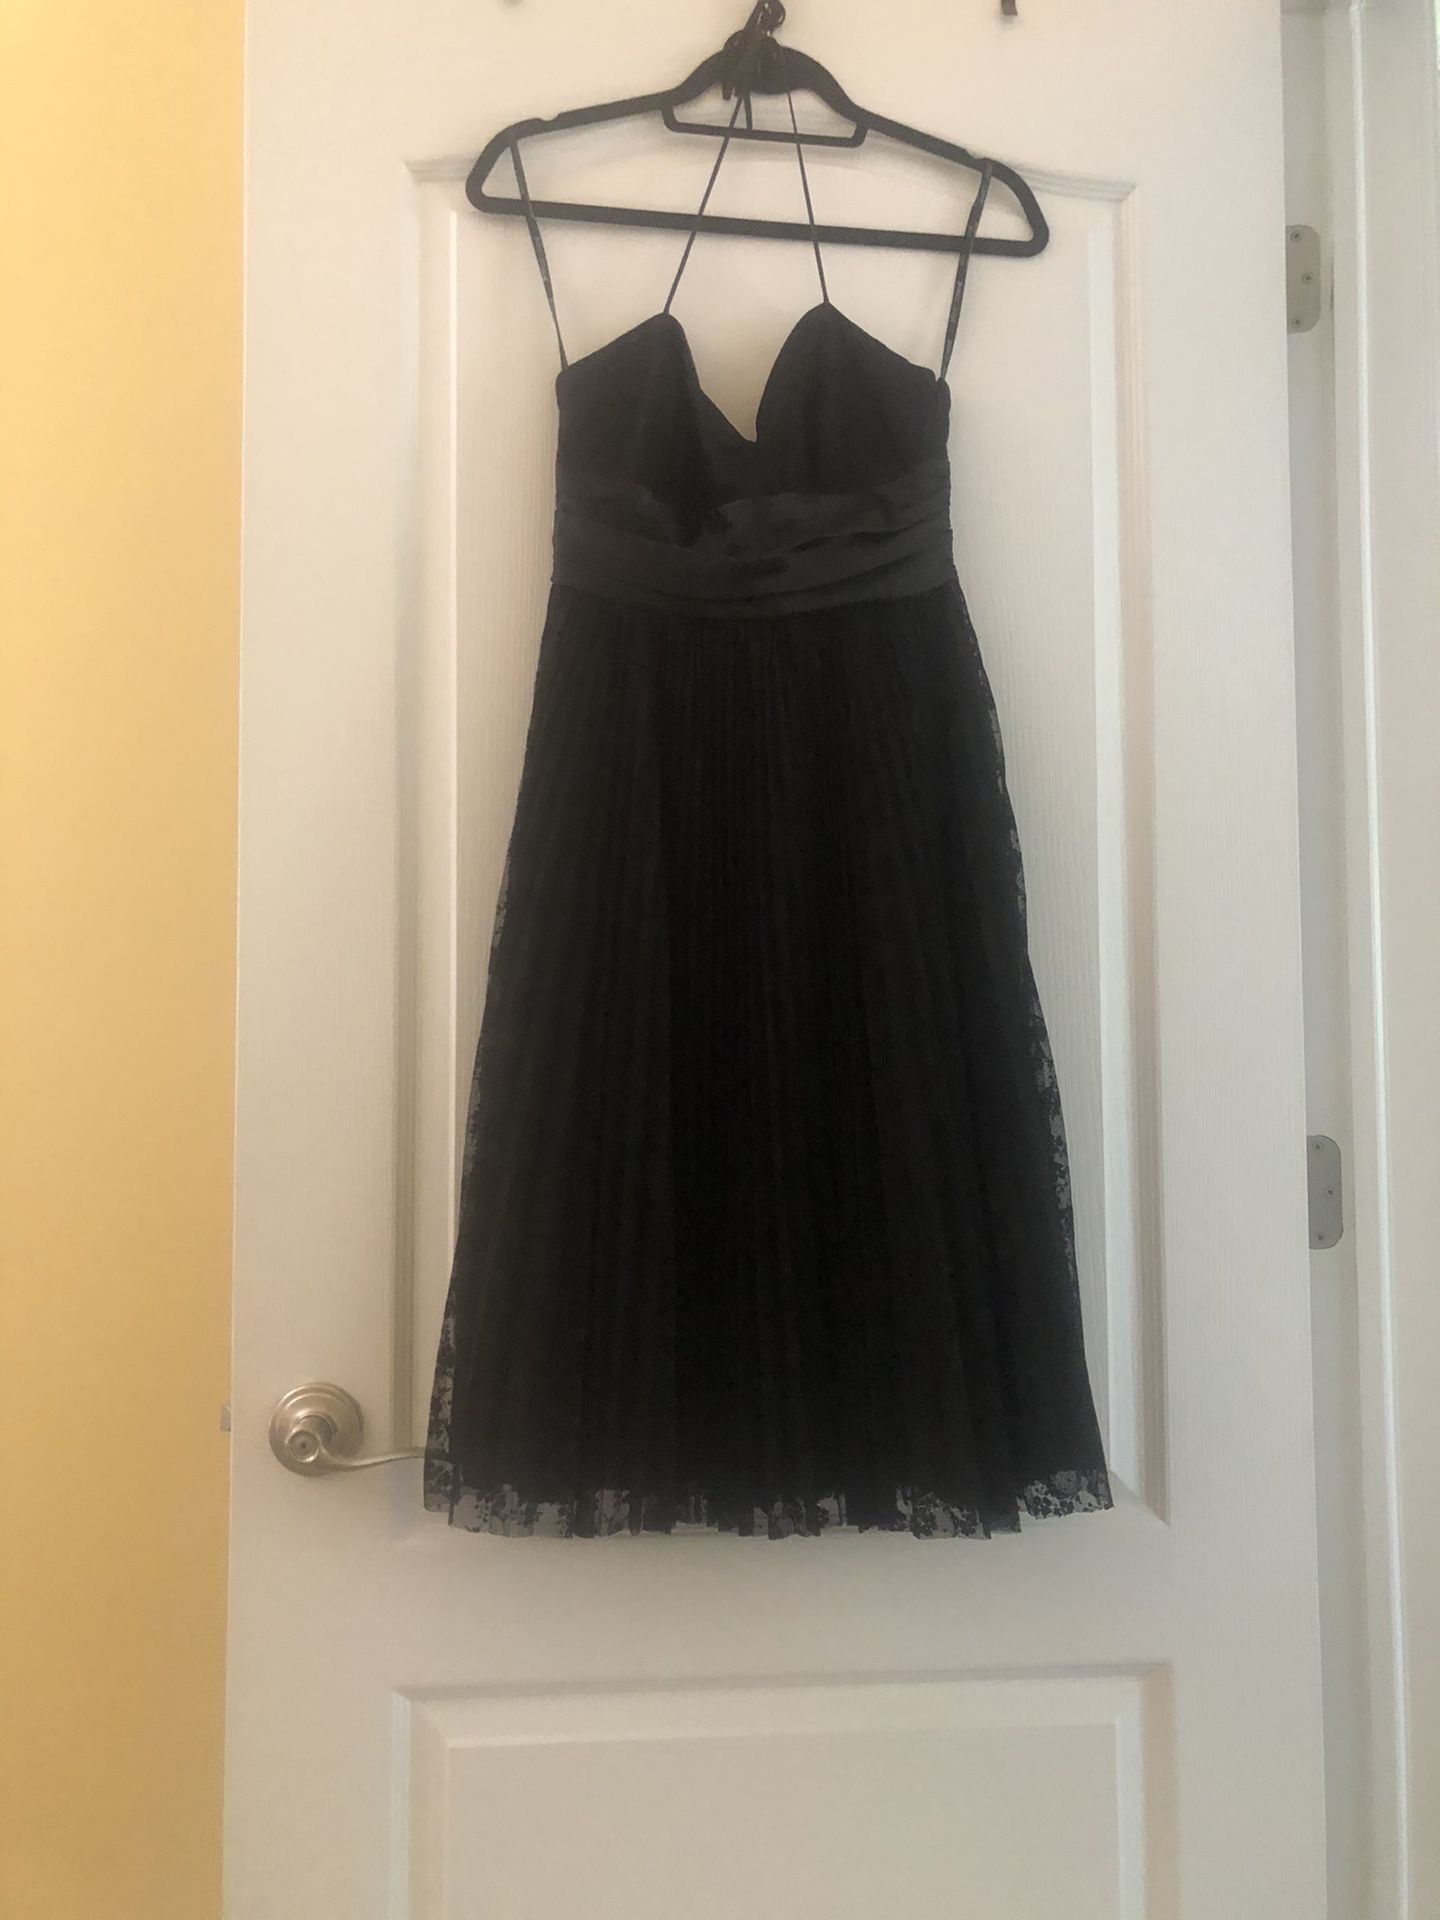 Betsey Johnson Cocktail Dress (Size 2)